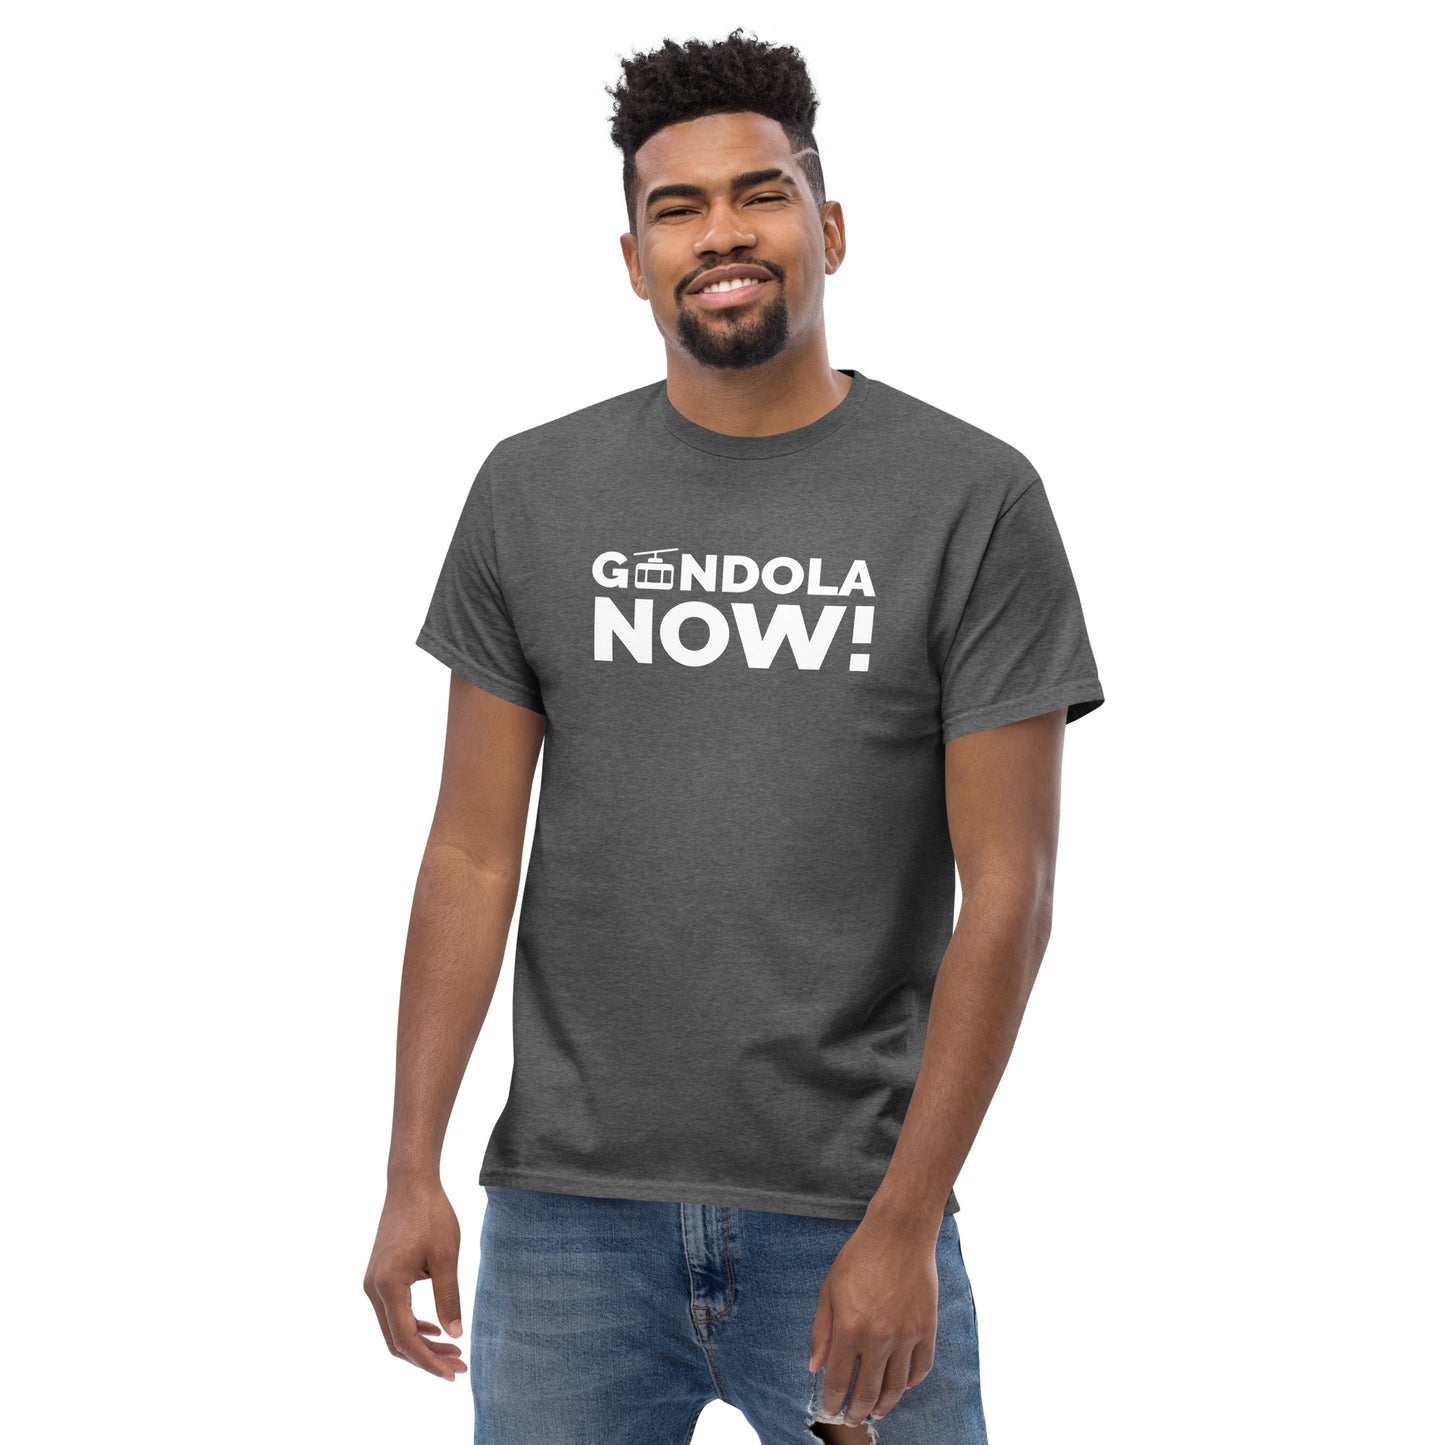 Gondola Now t-shirt